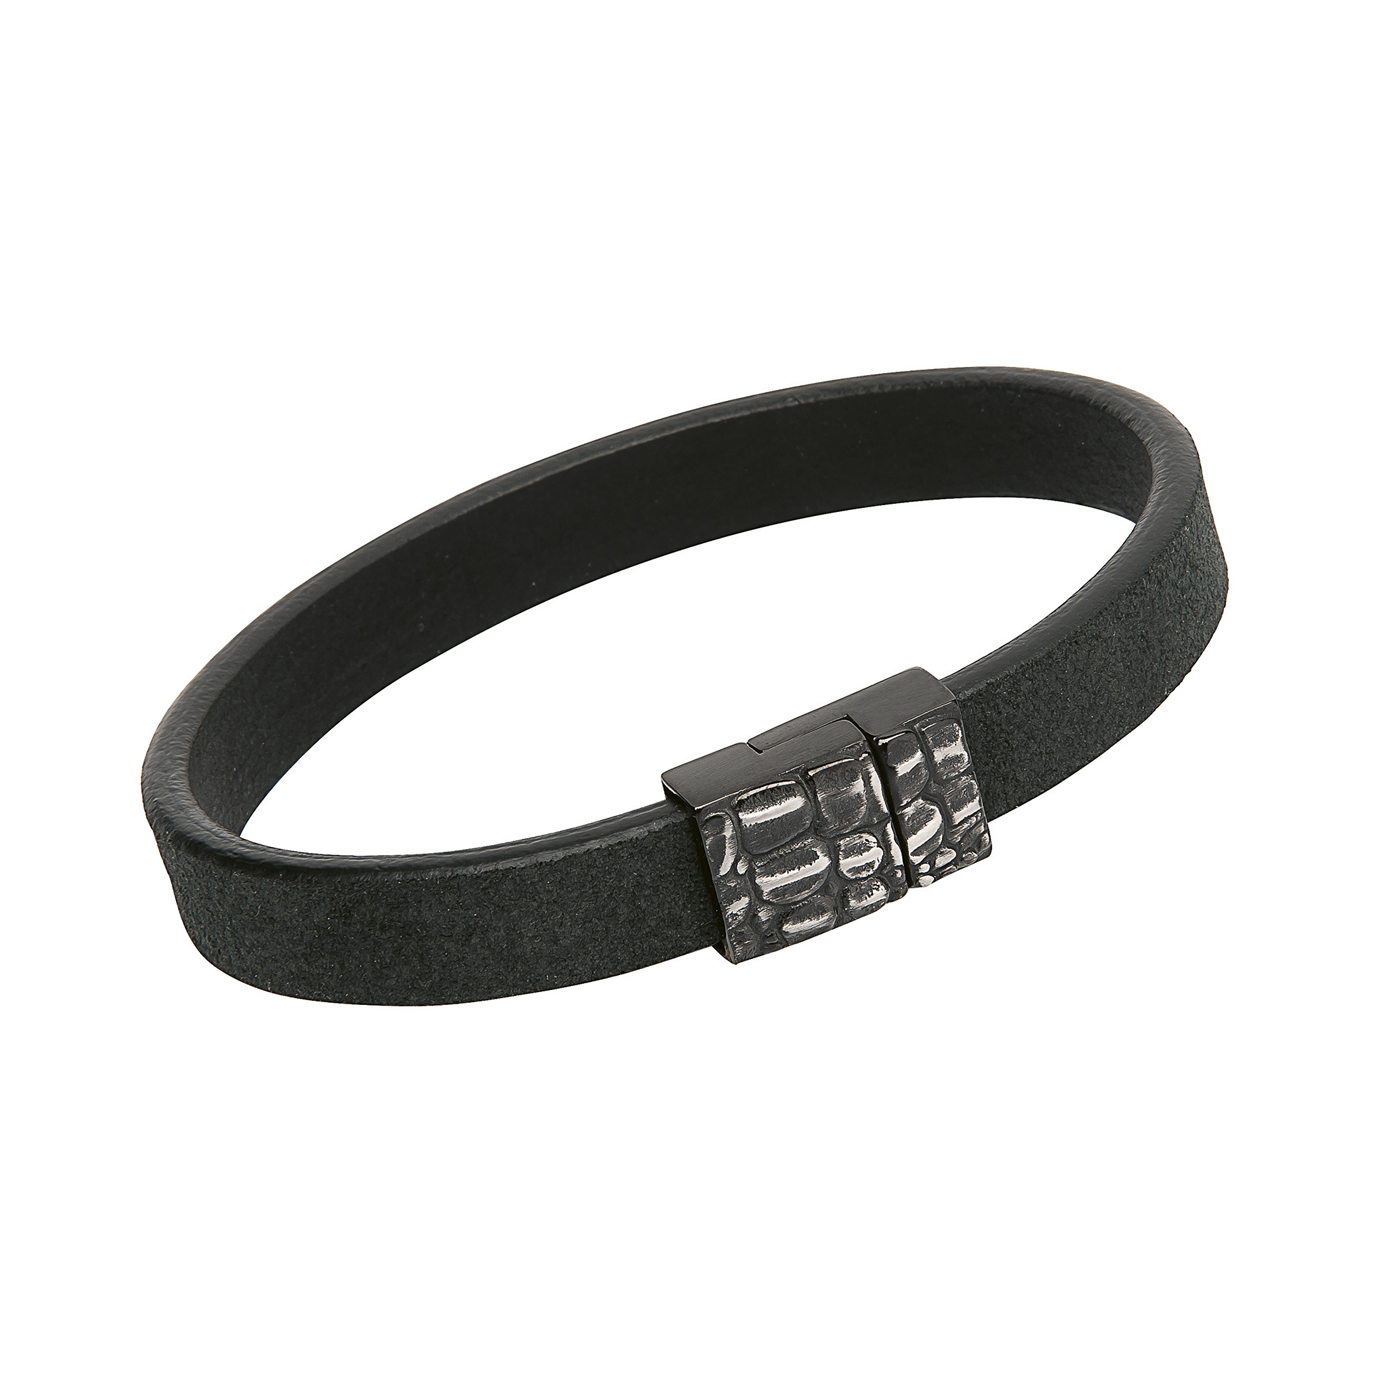 Suede Bracelet, Black, Length 19 cm - 1 piece